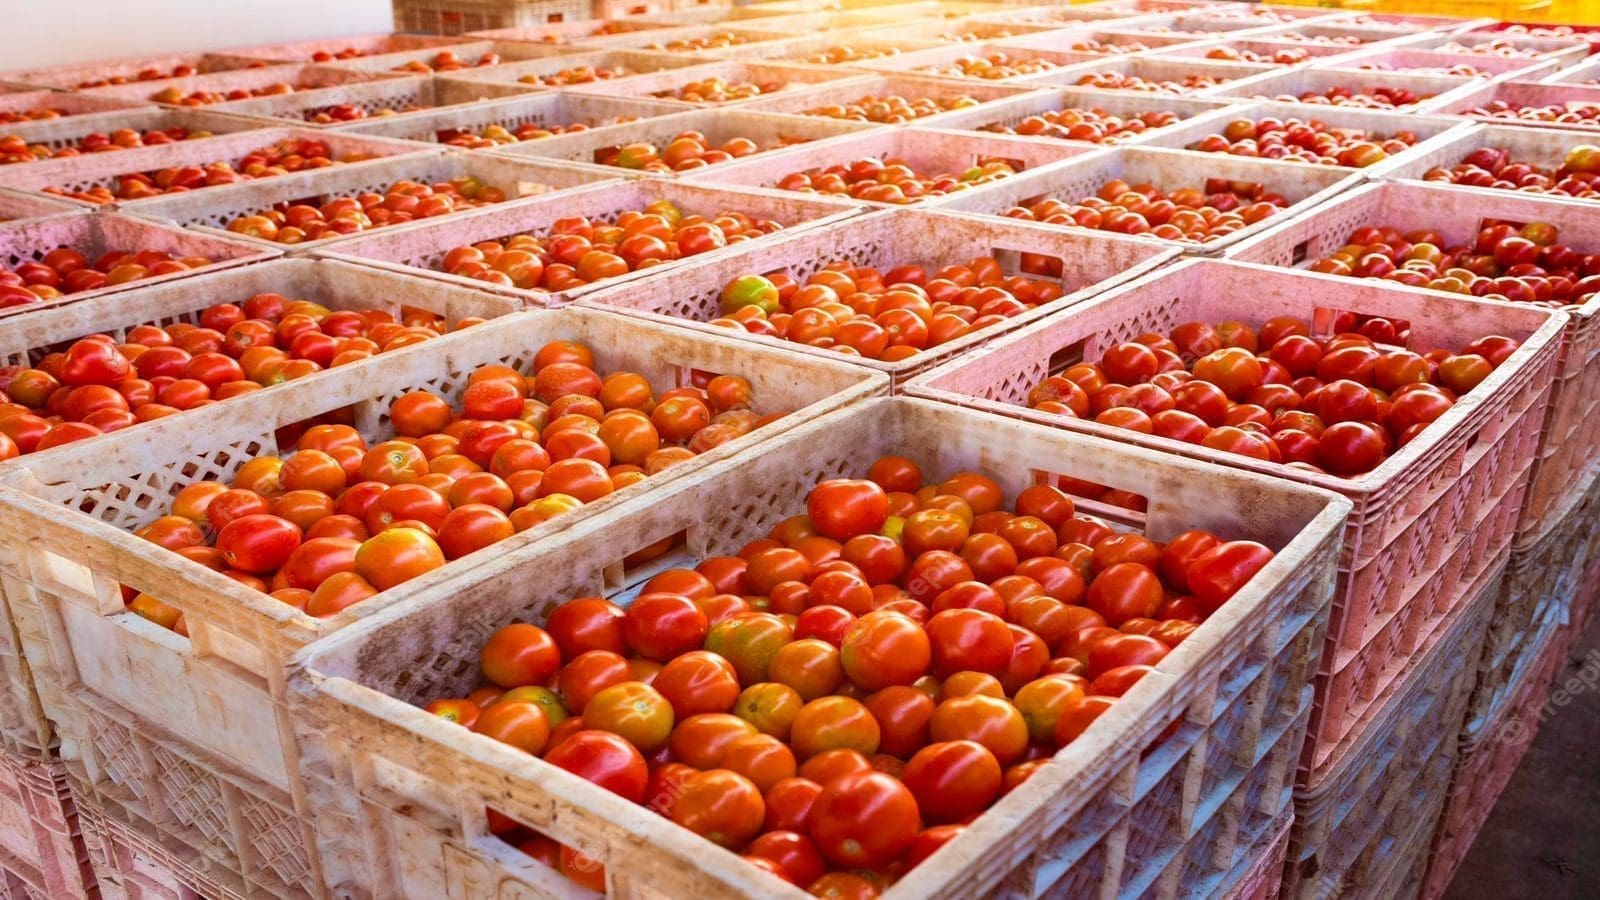 Ghana joins Kenya, Uganda in seeking export pass for tomatoes to UK’s US$212m market